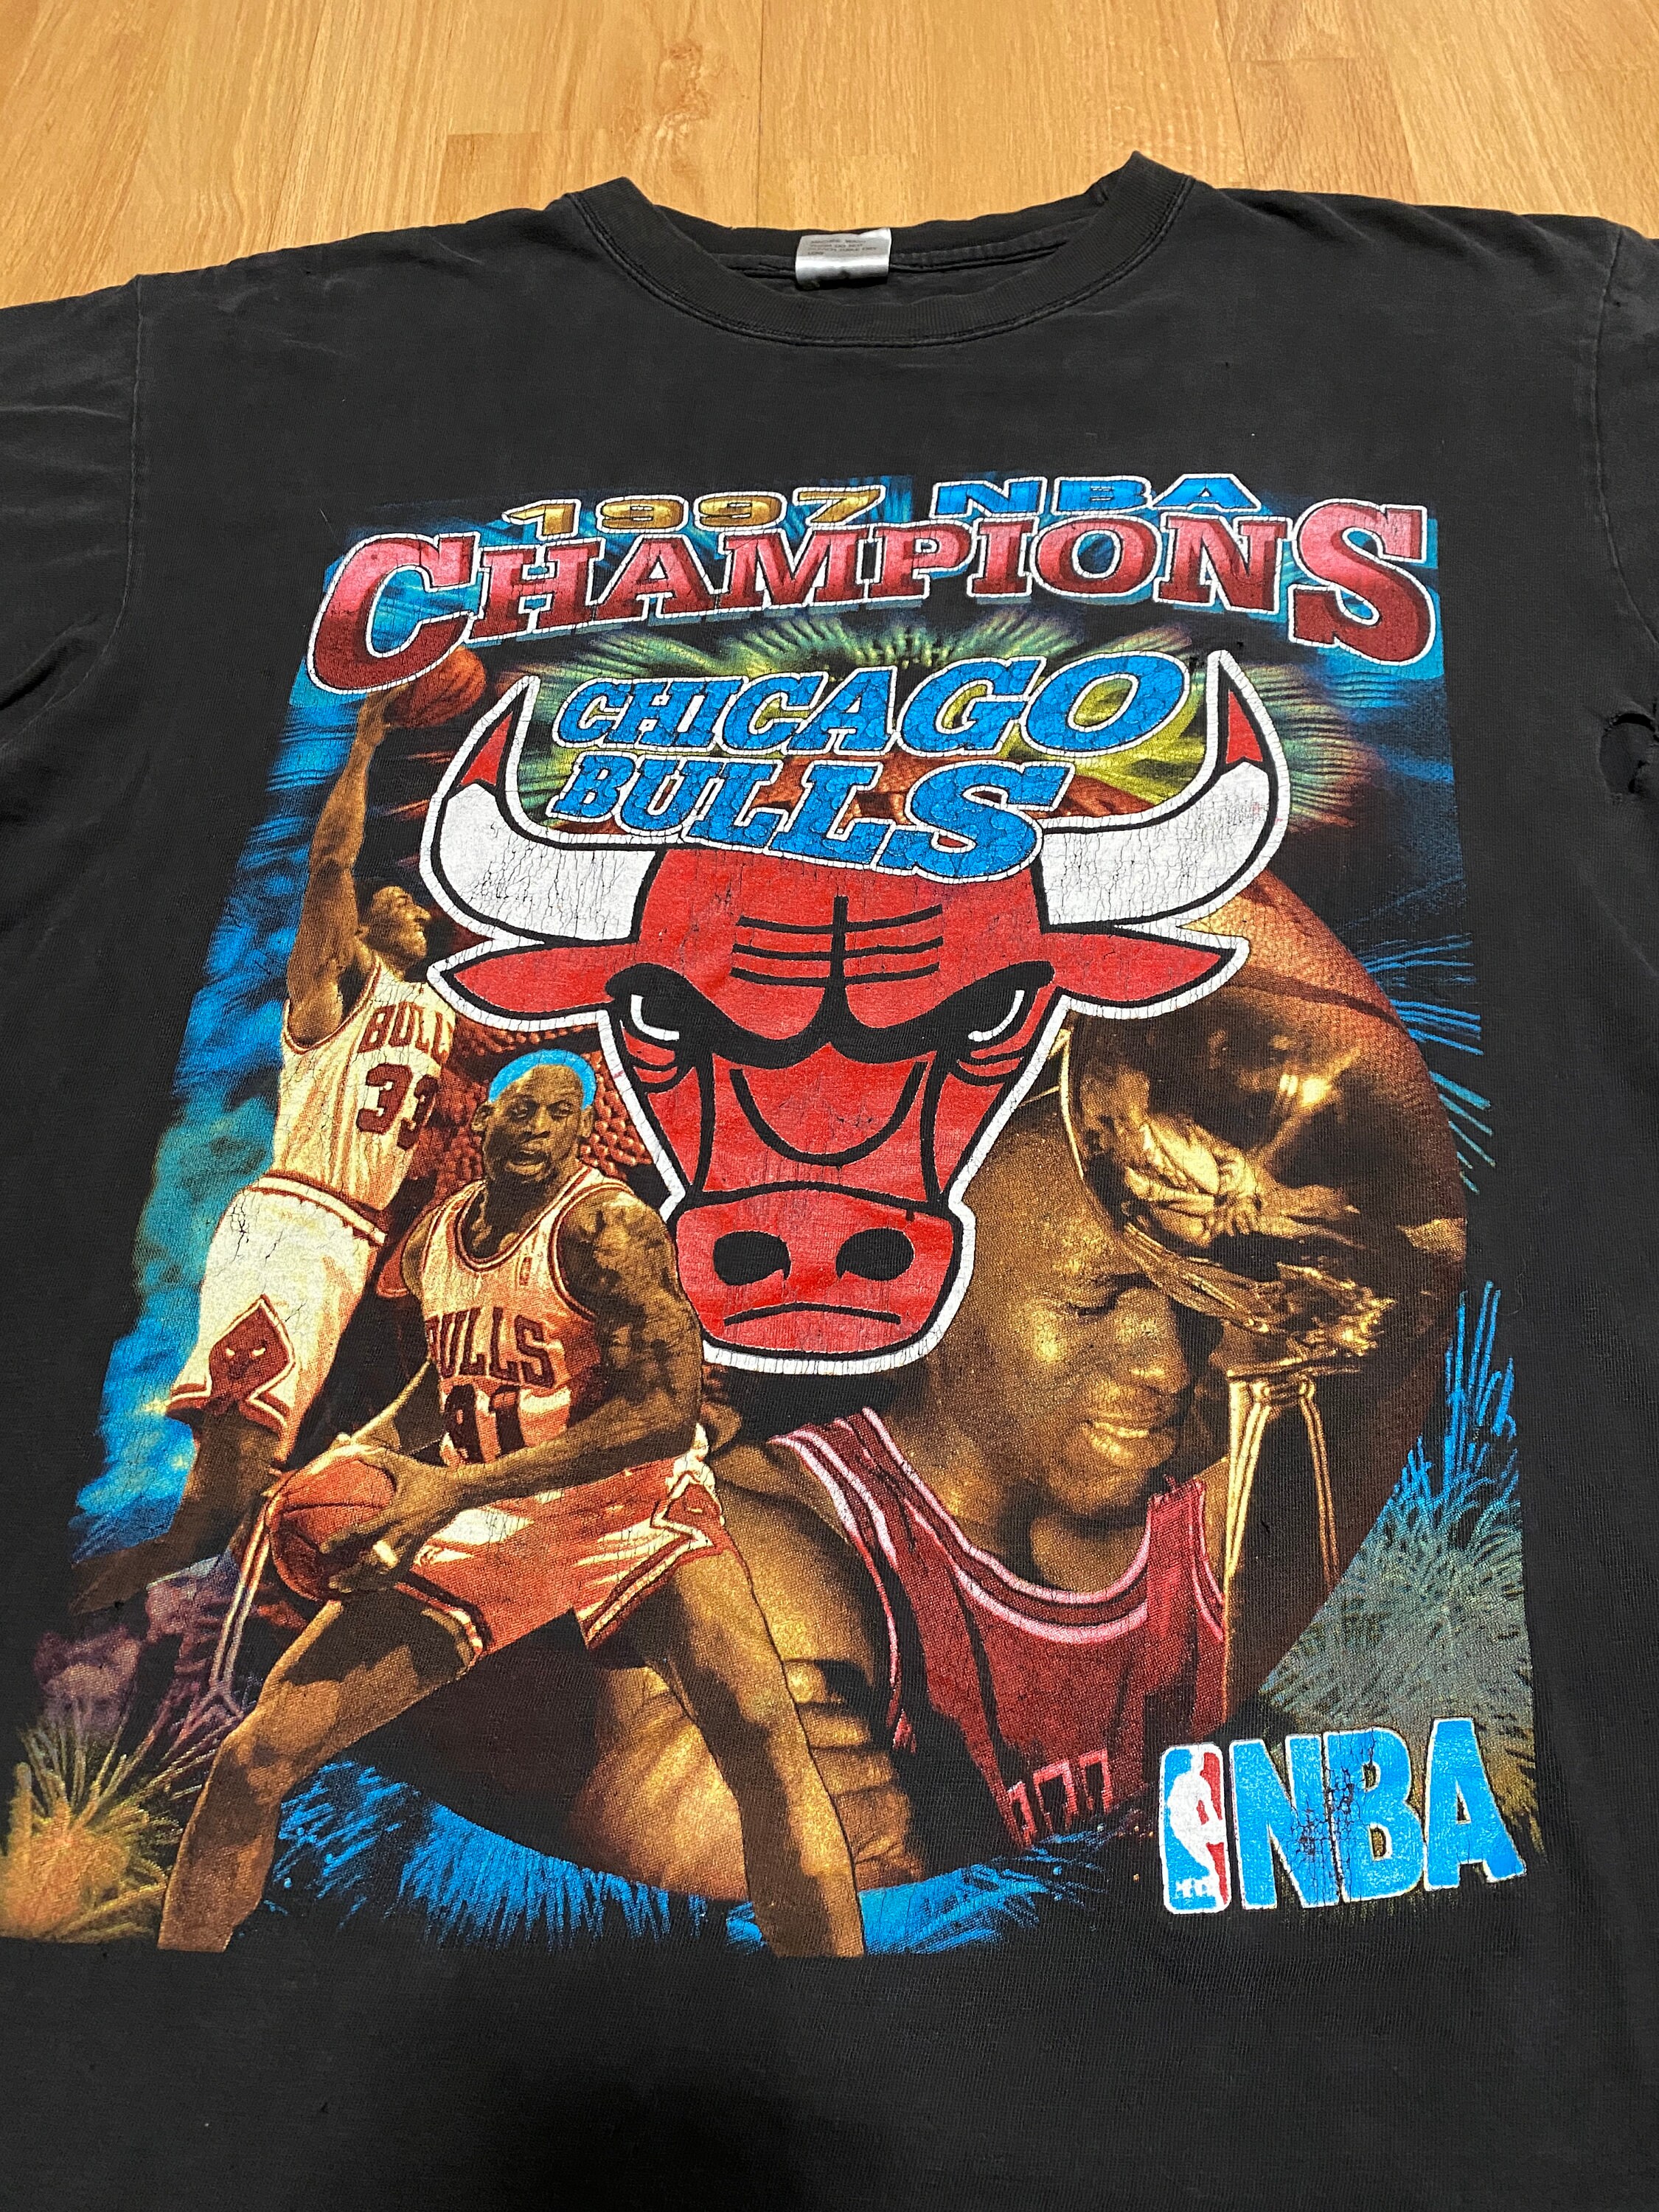 Vintage 90s Chicago Bulls T-Shirt Mens L Deadstock Basketball 1997 NBA  Champions